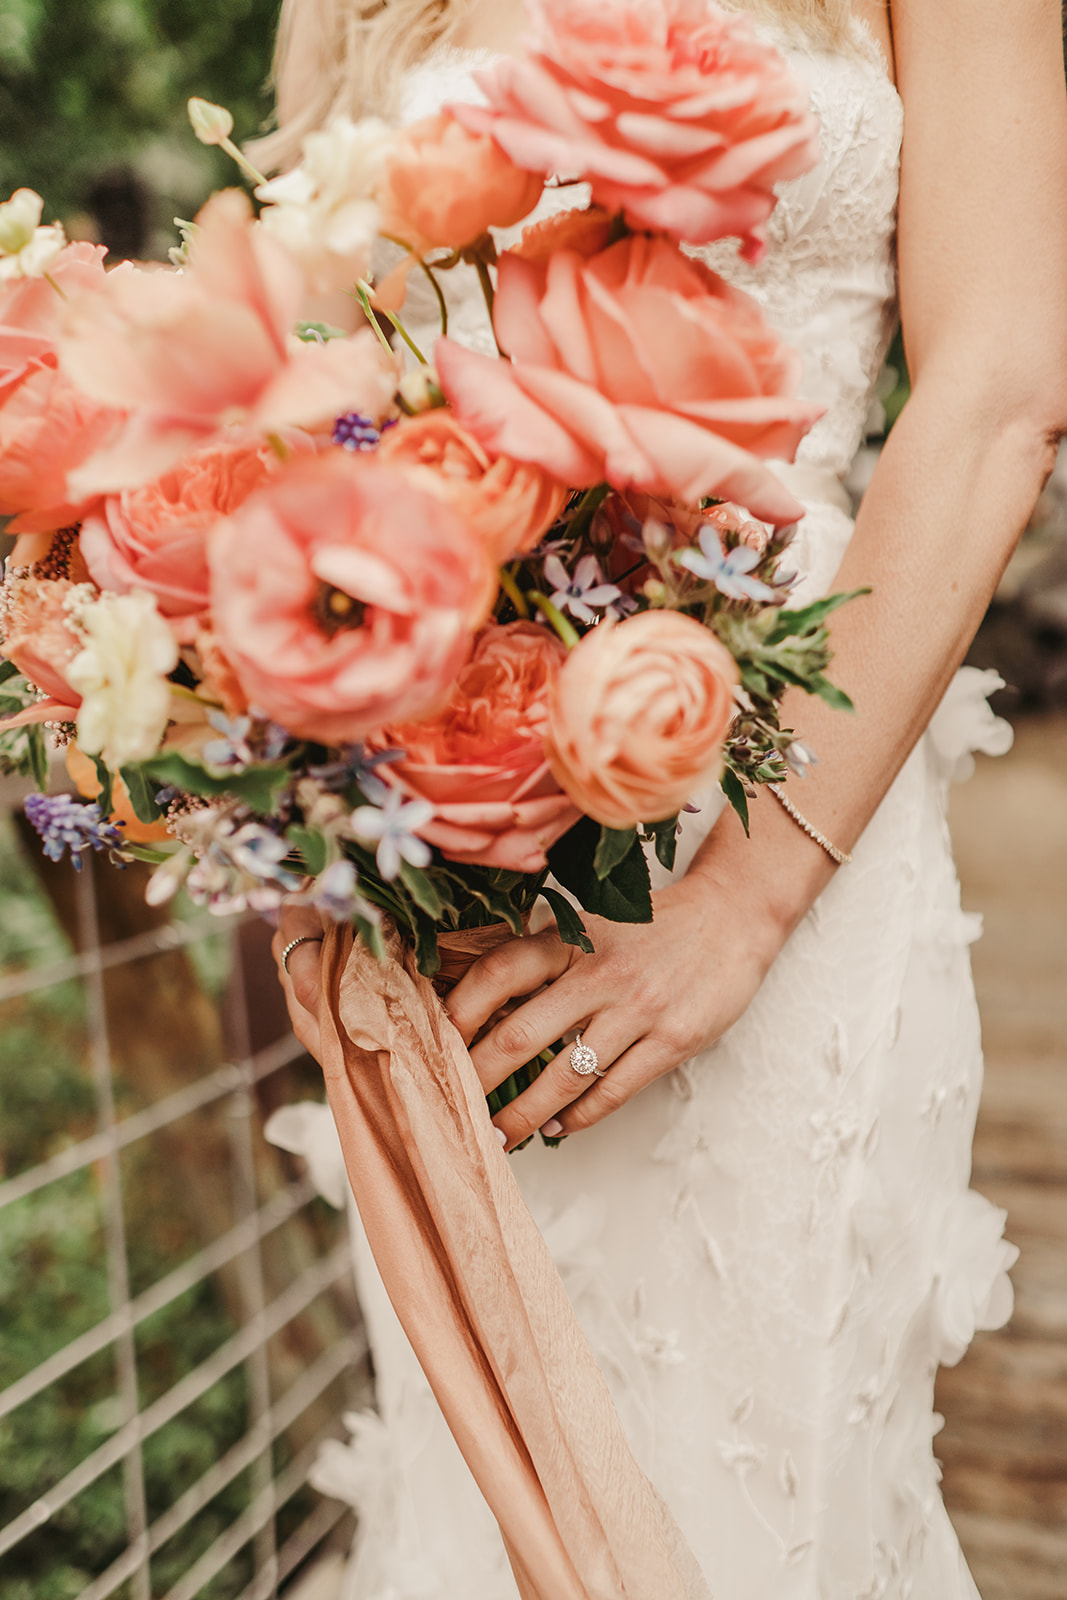 Kaitlin Holding Beautiful Flowers | The Wedding Standard